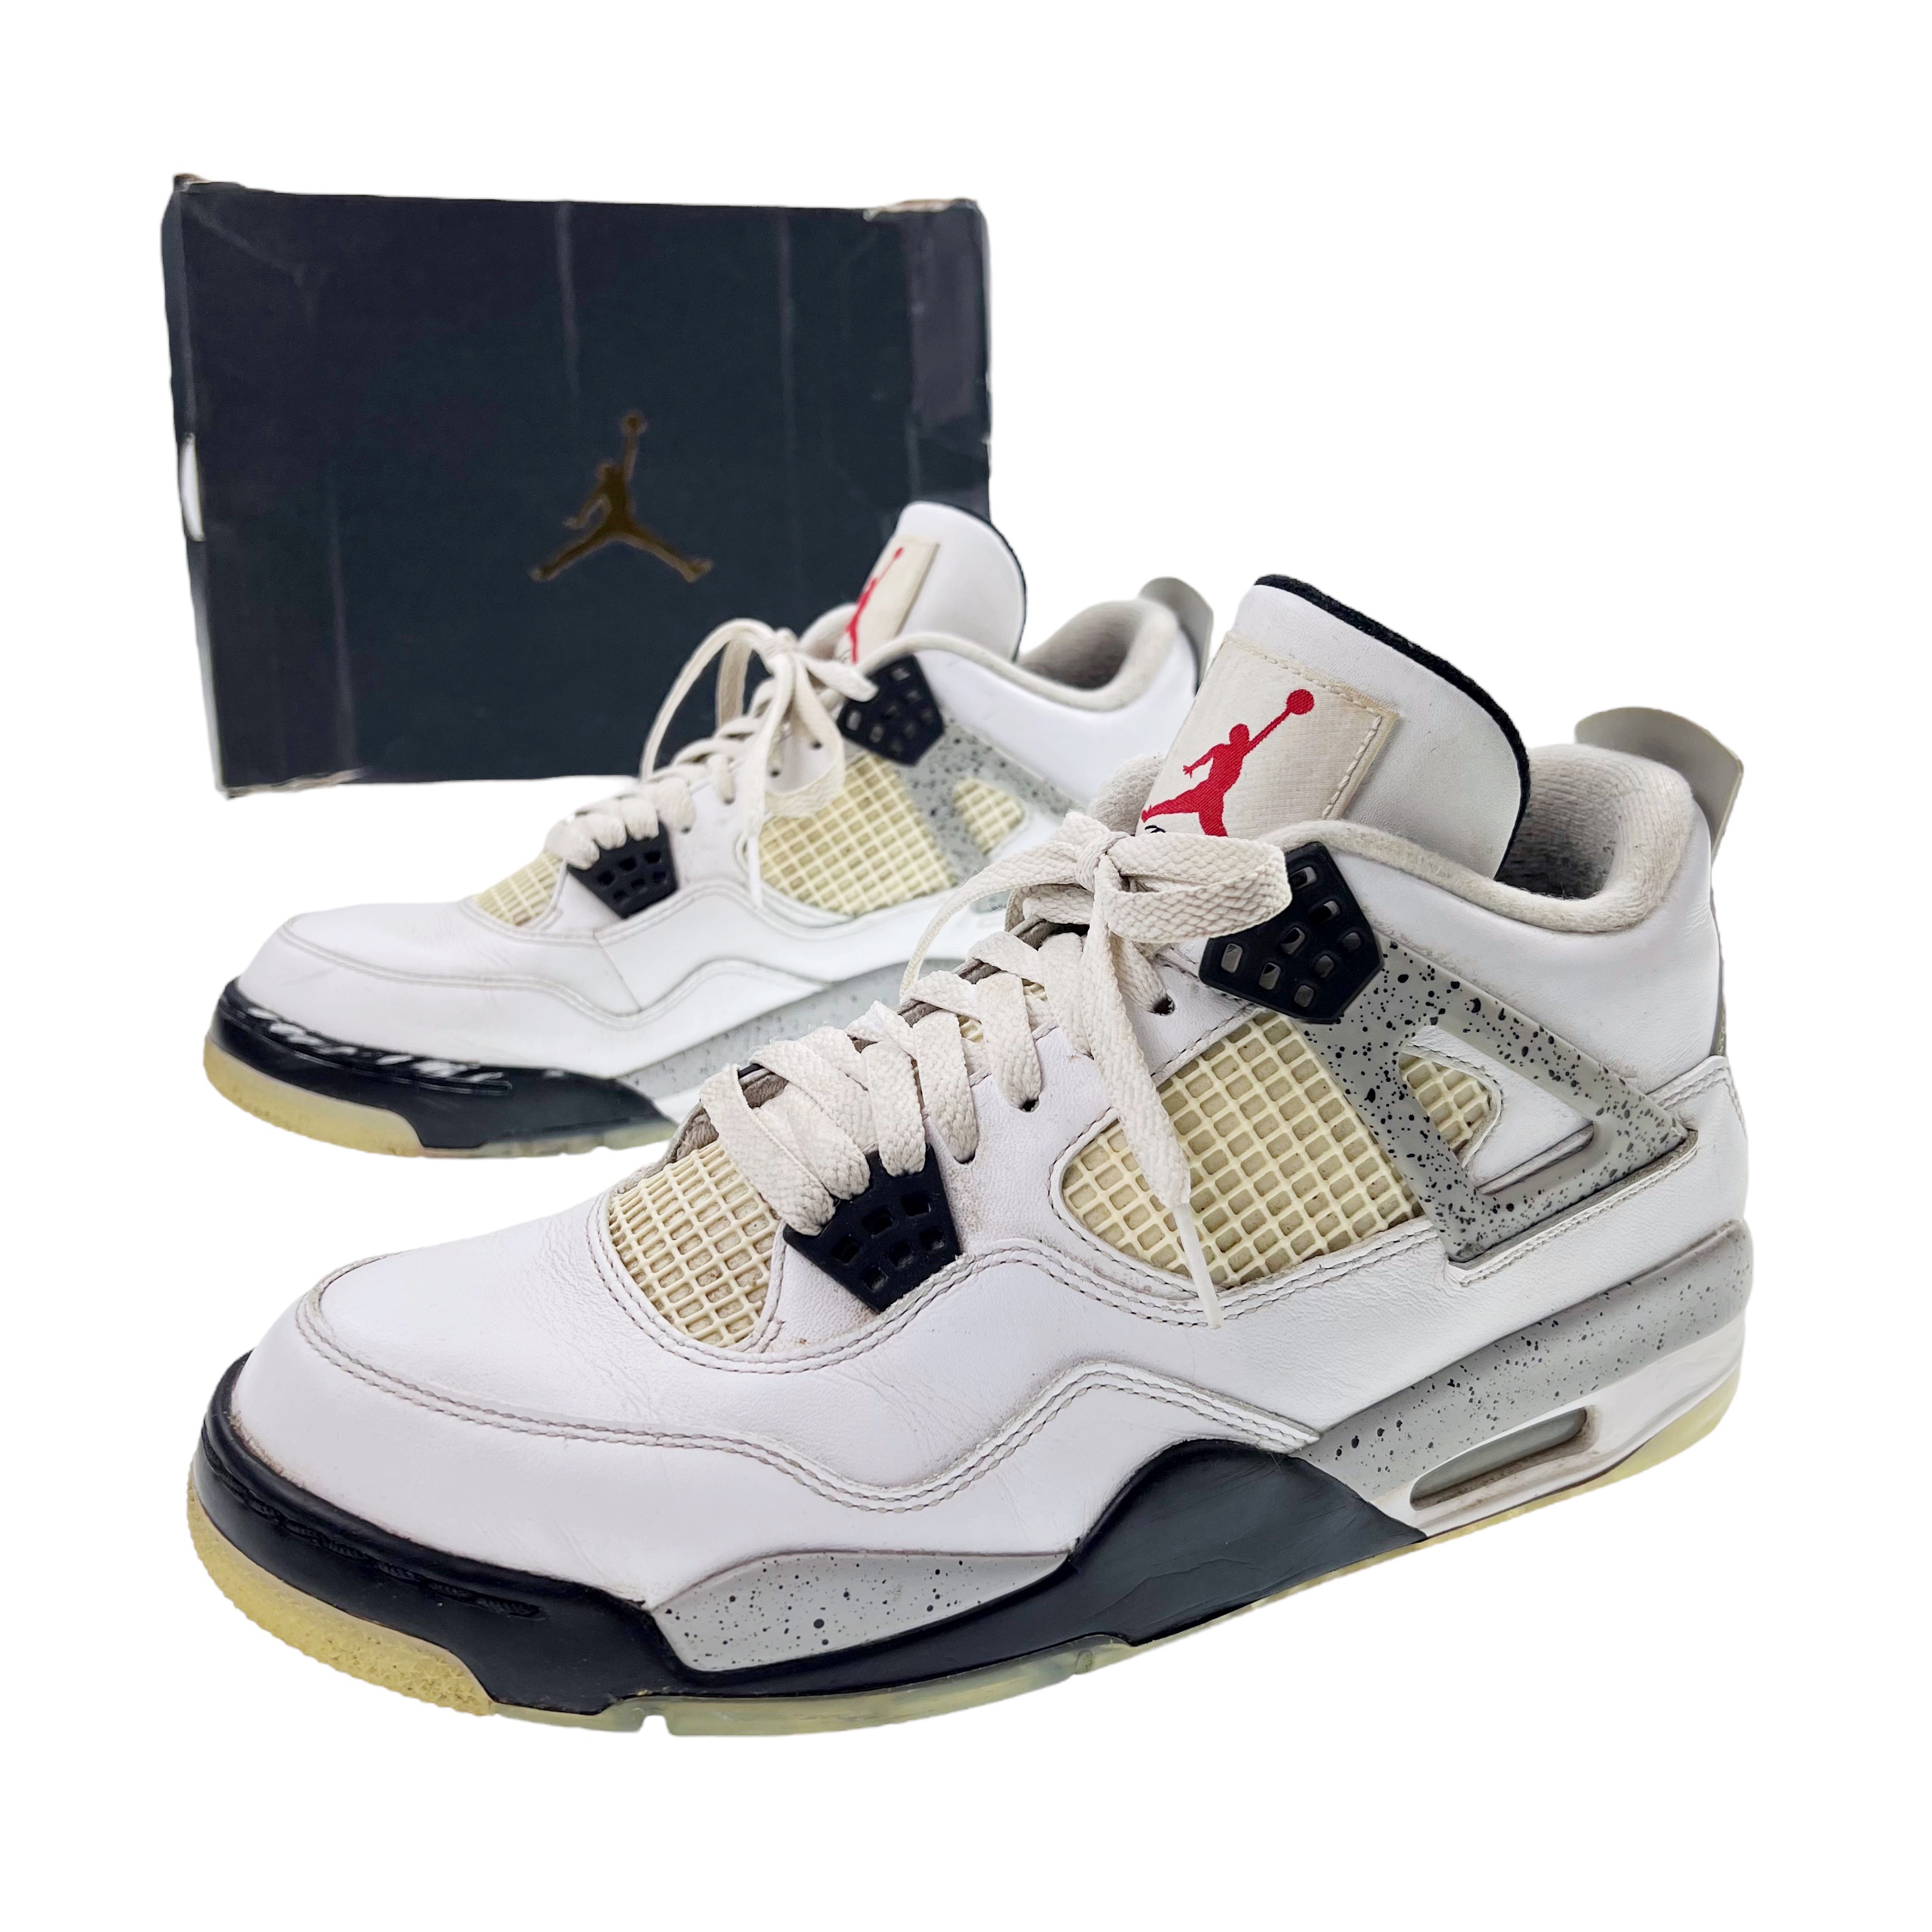 Nike Air Jordan 4 Retro Golf White Cement - Oliver's Archive